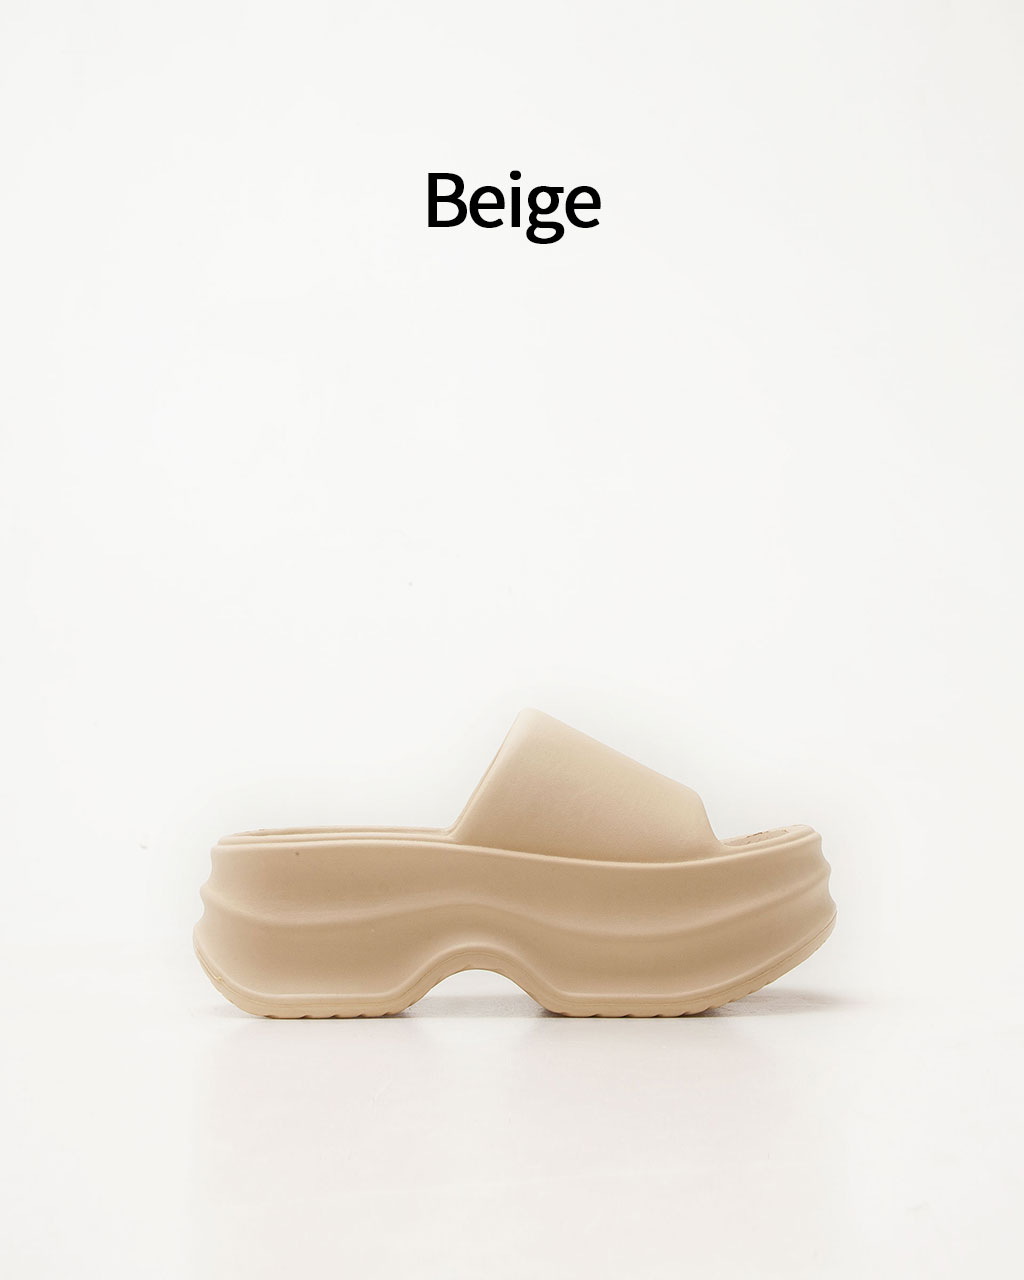 Waves-8 - Beige()